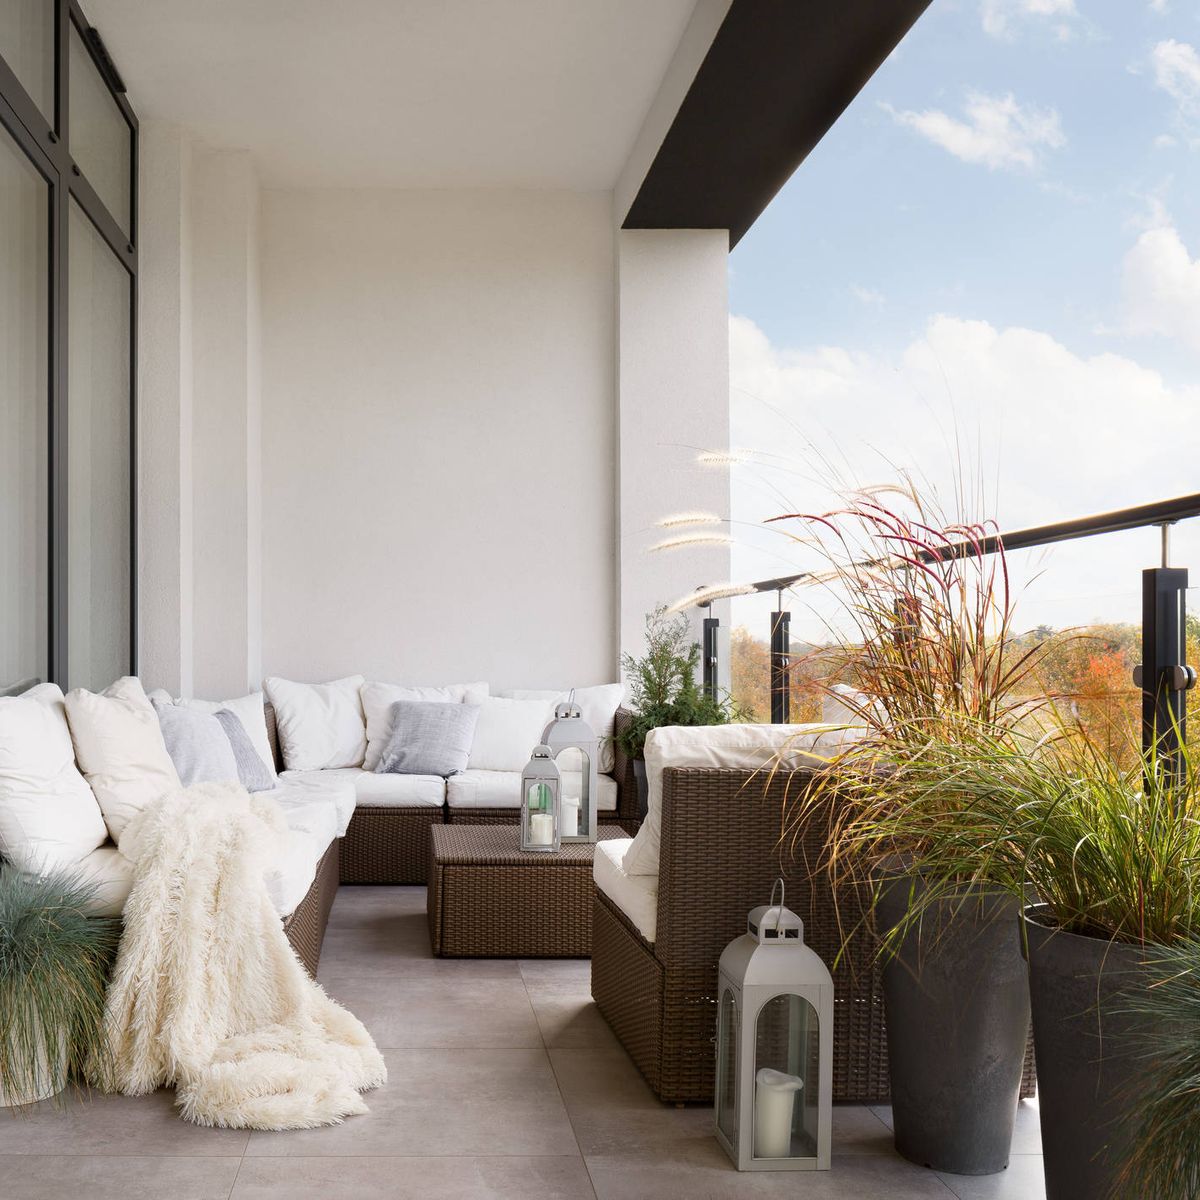 Muebles de terraza: qué material elegir